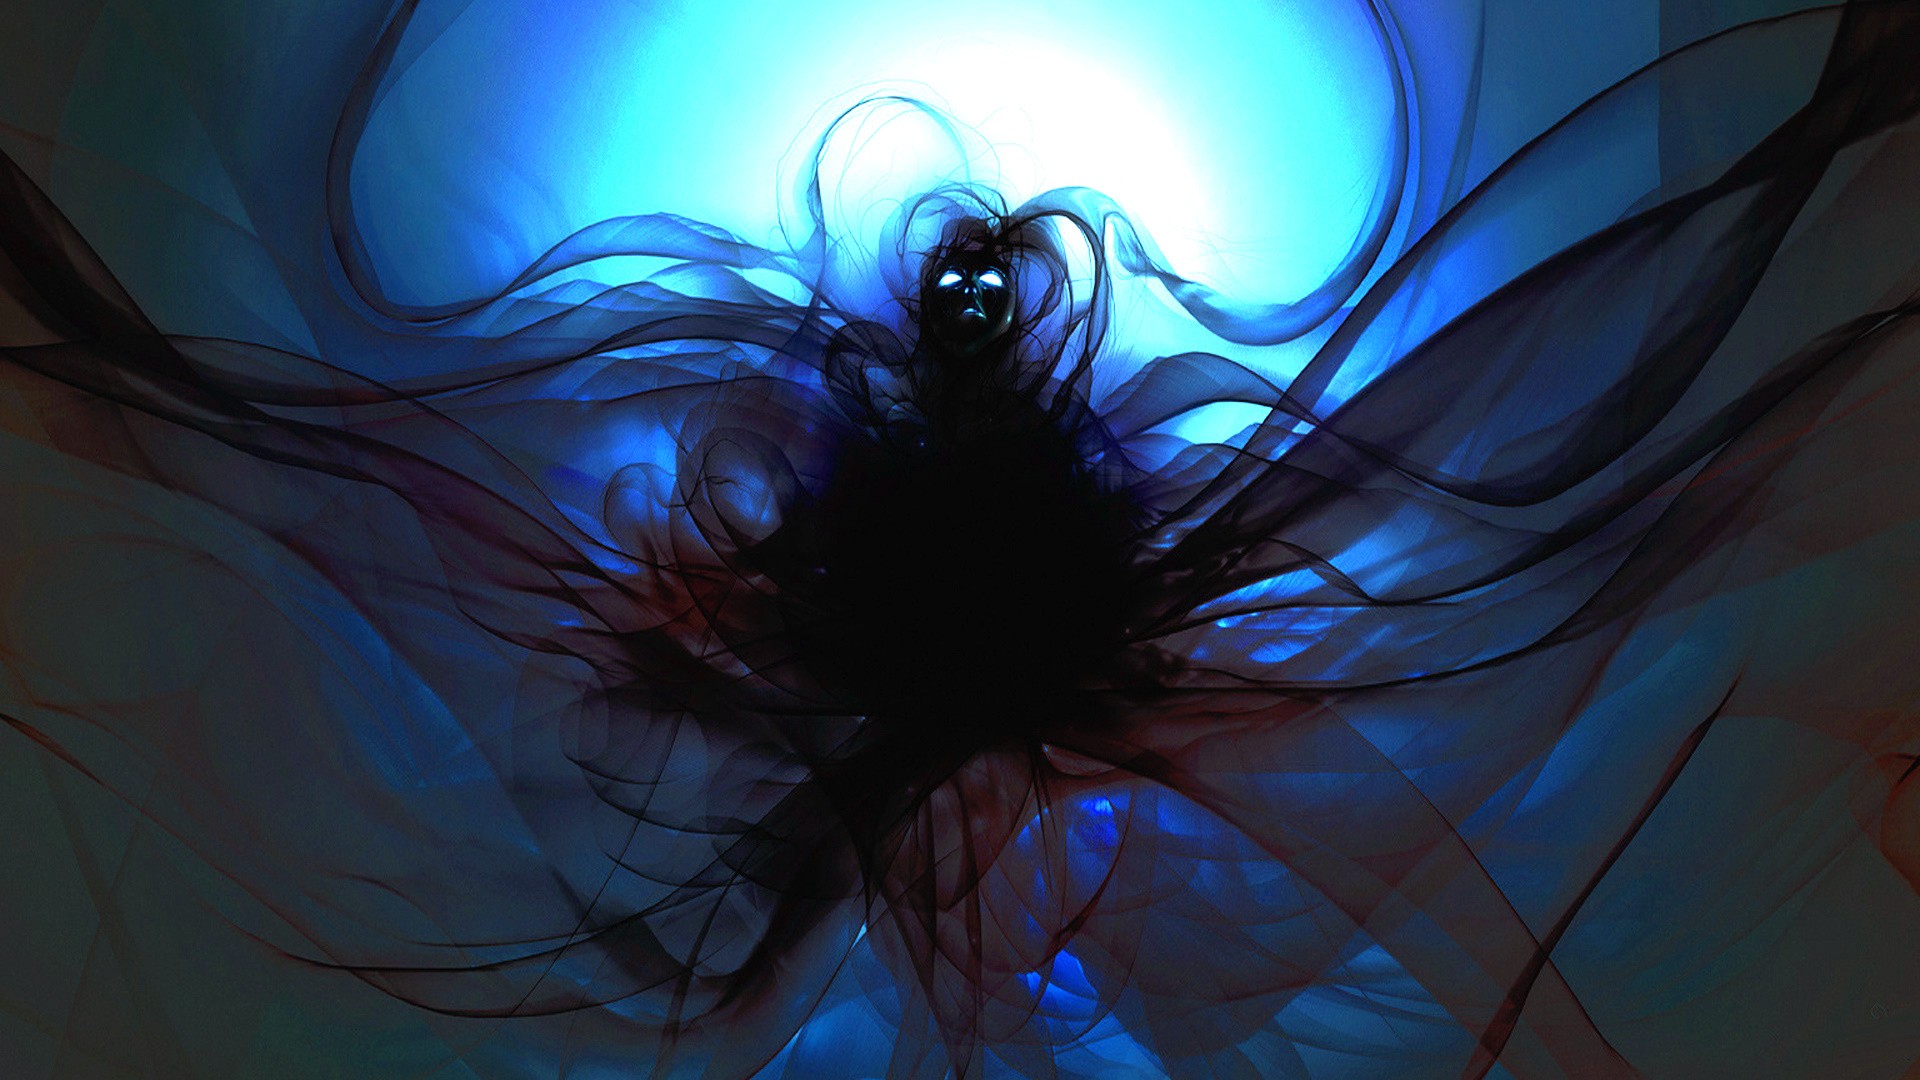 creepy anime wallpaper,blue,fractal art,cg artwork,darkness,graphic design